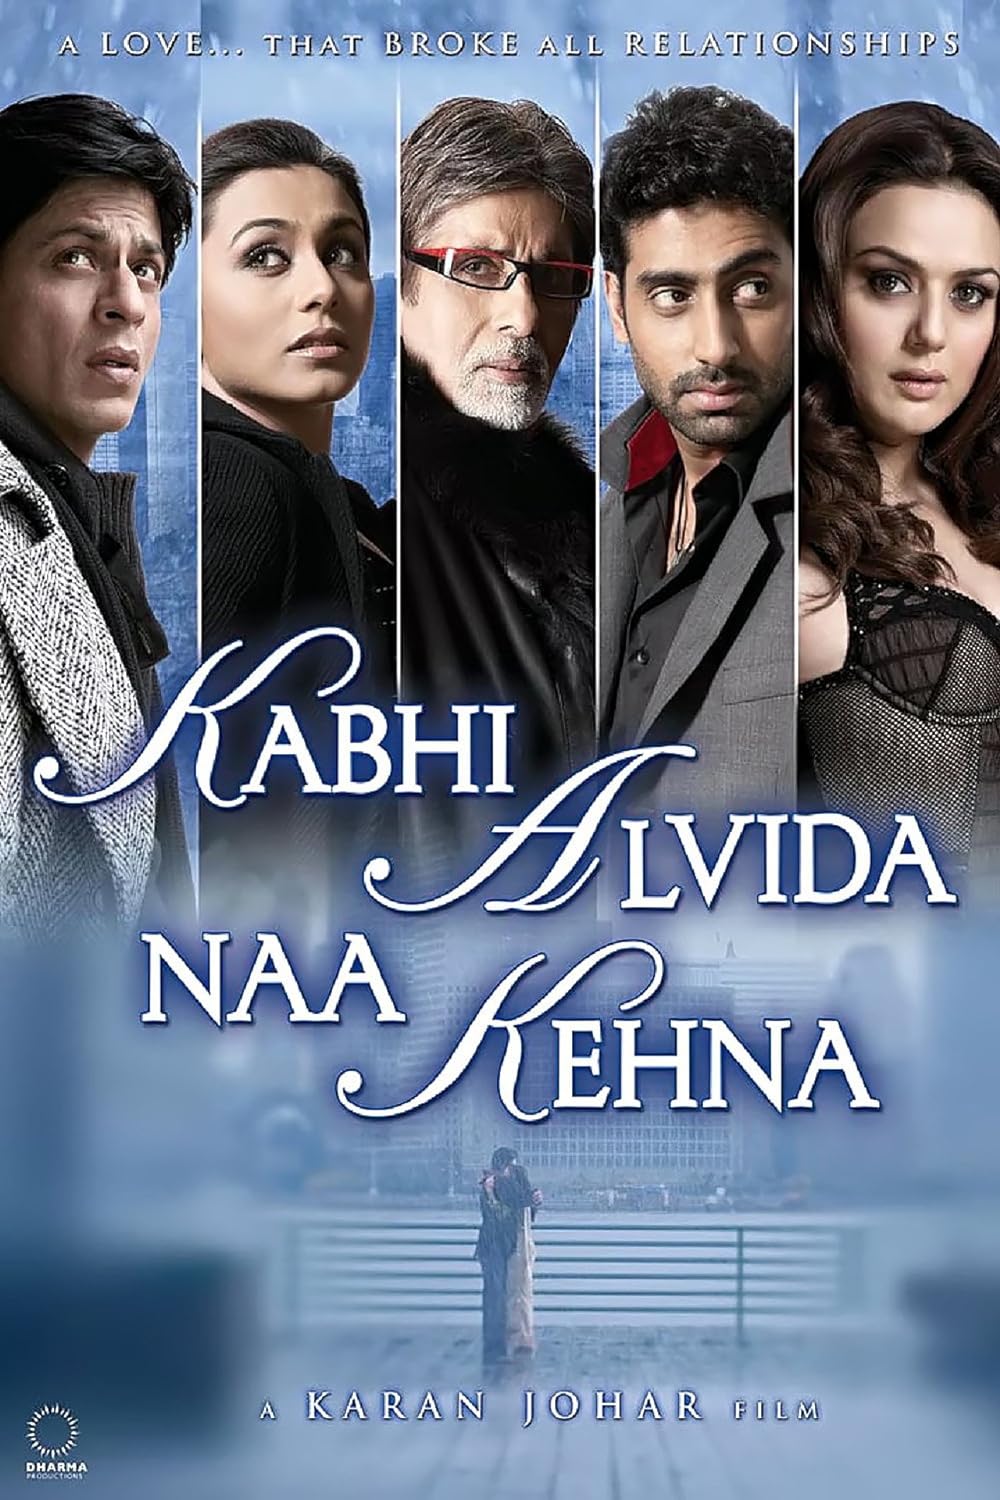 Download Kabhi Alvida Naa Kehna (2006) Hindi Movie Bluray || 720p [1.5GB]